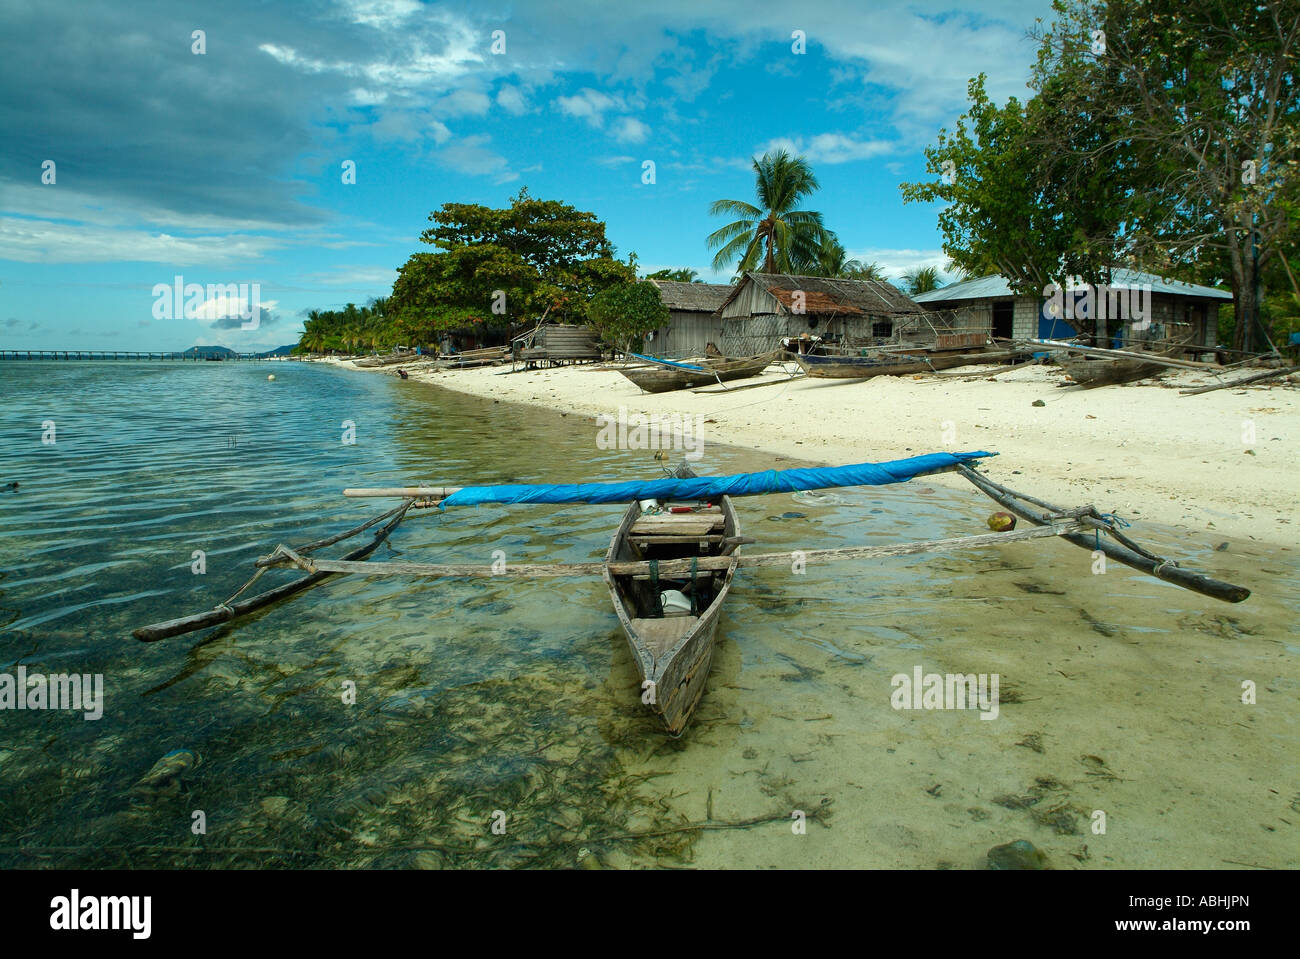 Wooden boat, Small island in Raja Ampat Archipelago, Indonesia Stock Photo